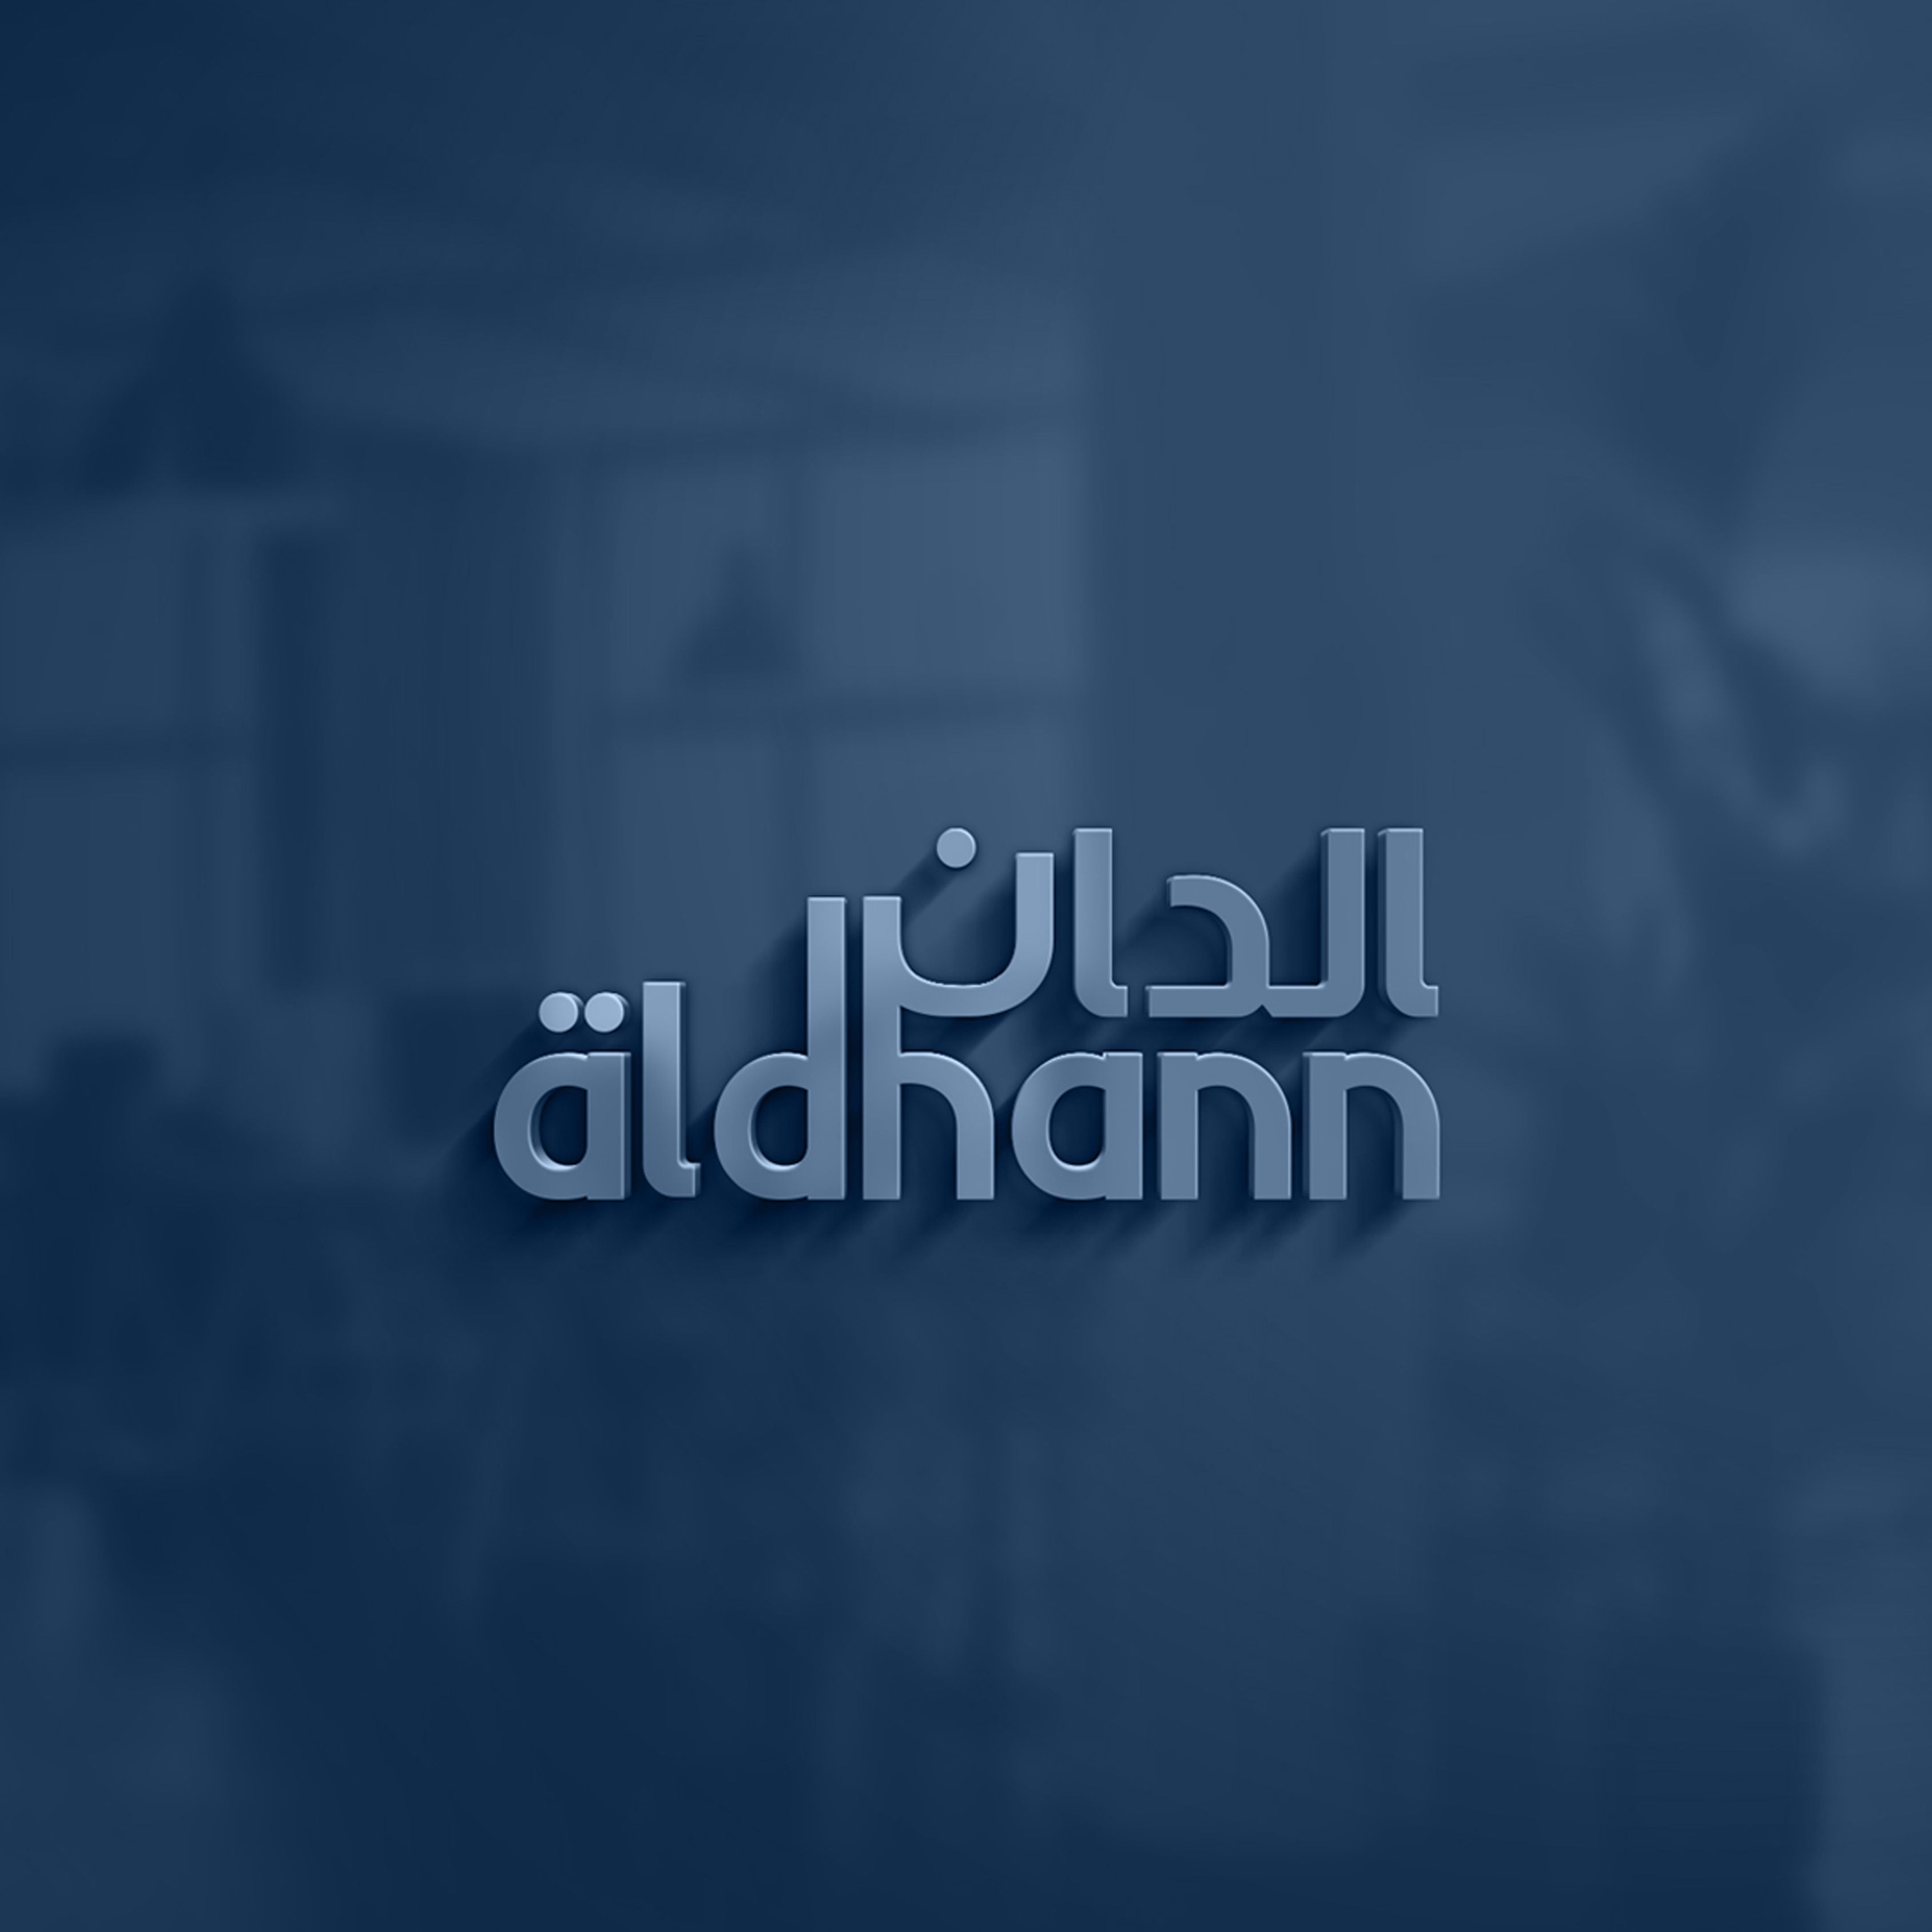 aldhann website  mockup | Binocular Advertising